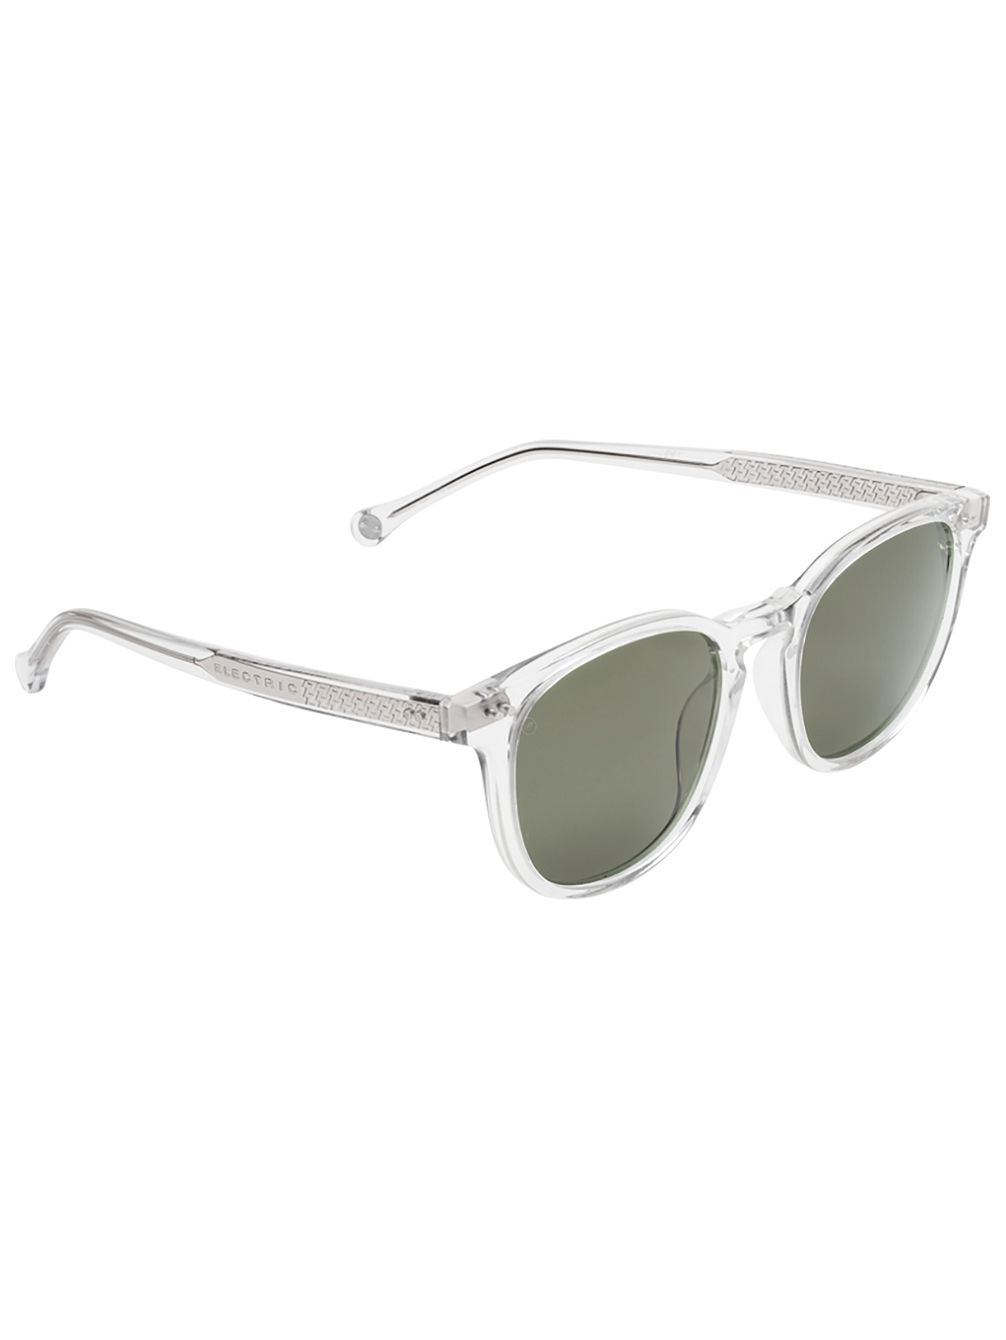 Oak Crystal Sunglasses